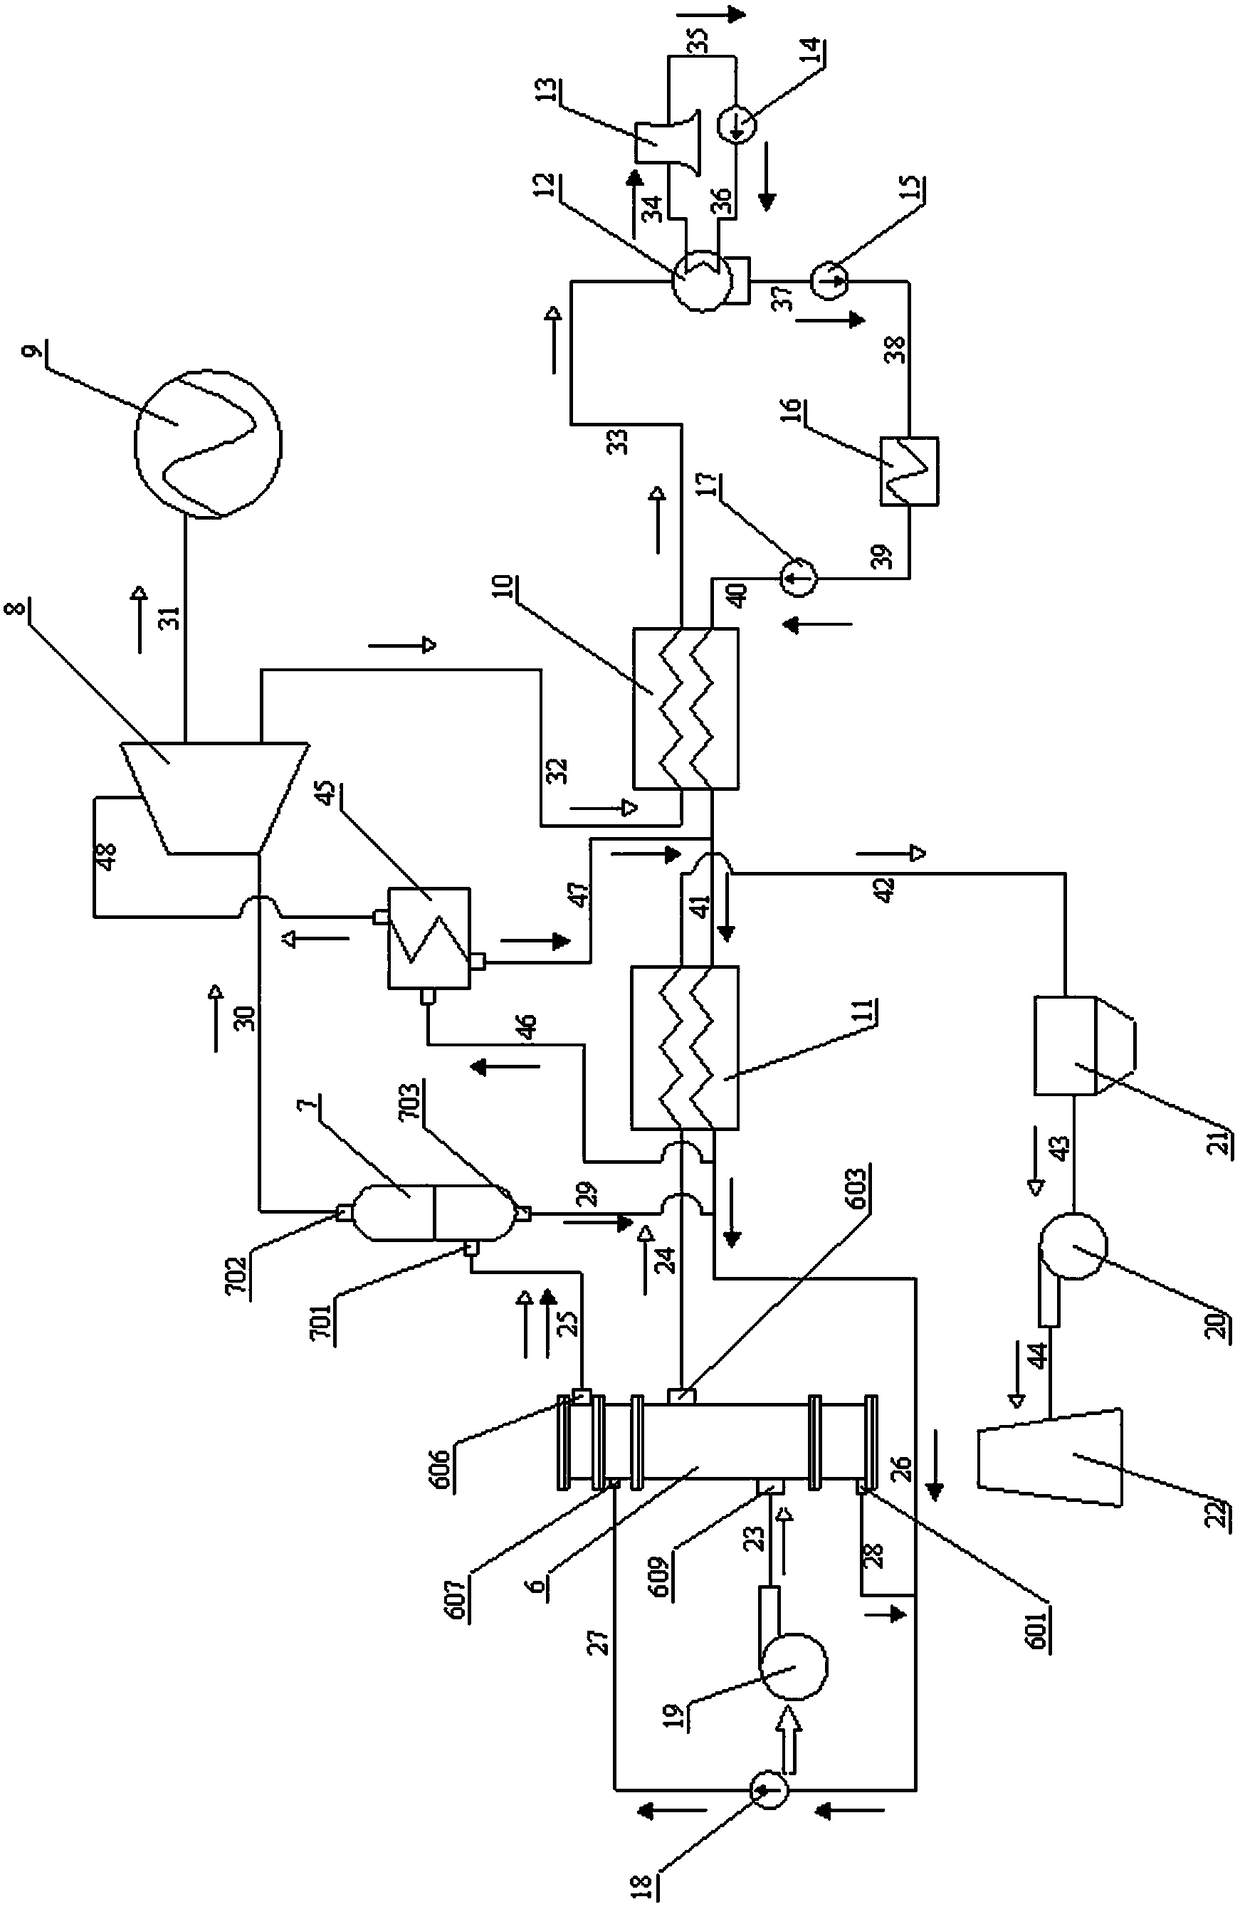 An Organic Rankine Cycle Waste Heat Power Generation System Based on Falling Film Evaporator